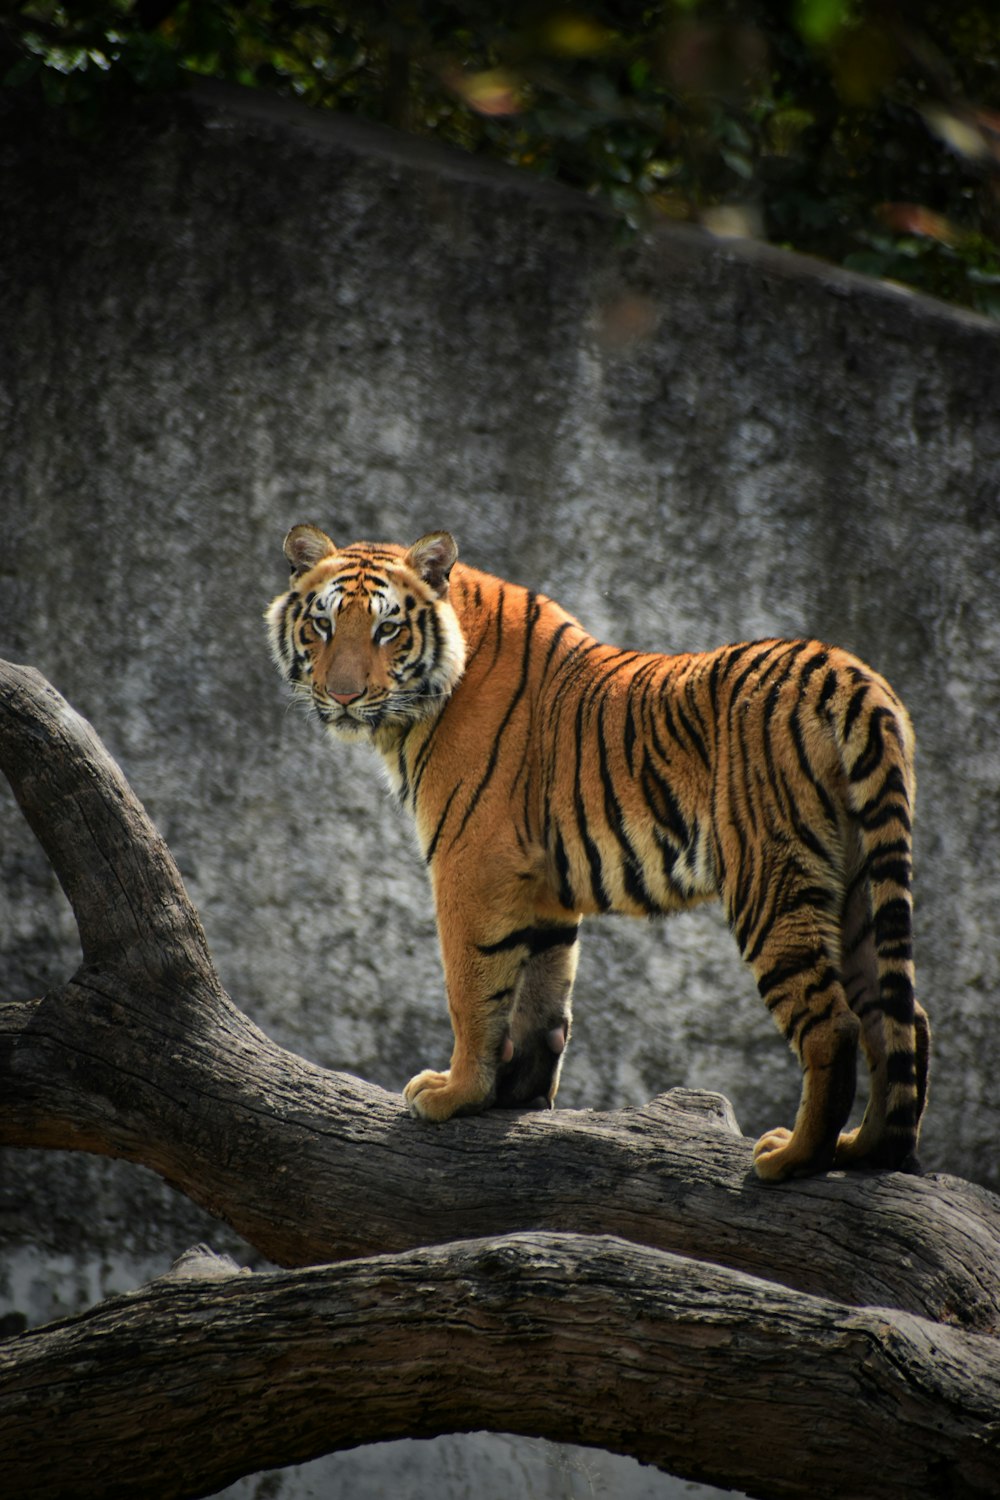 Tiger Print Pictures | Download Free Images on Unsplash